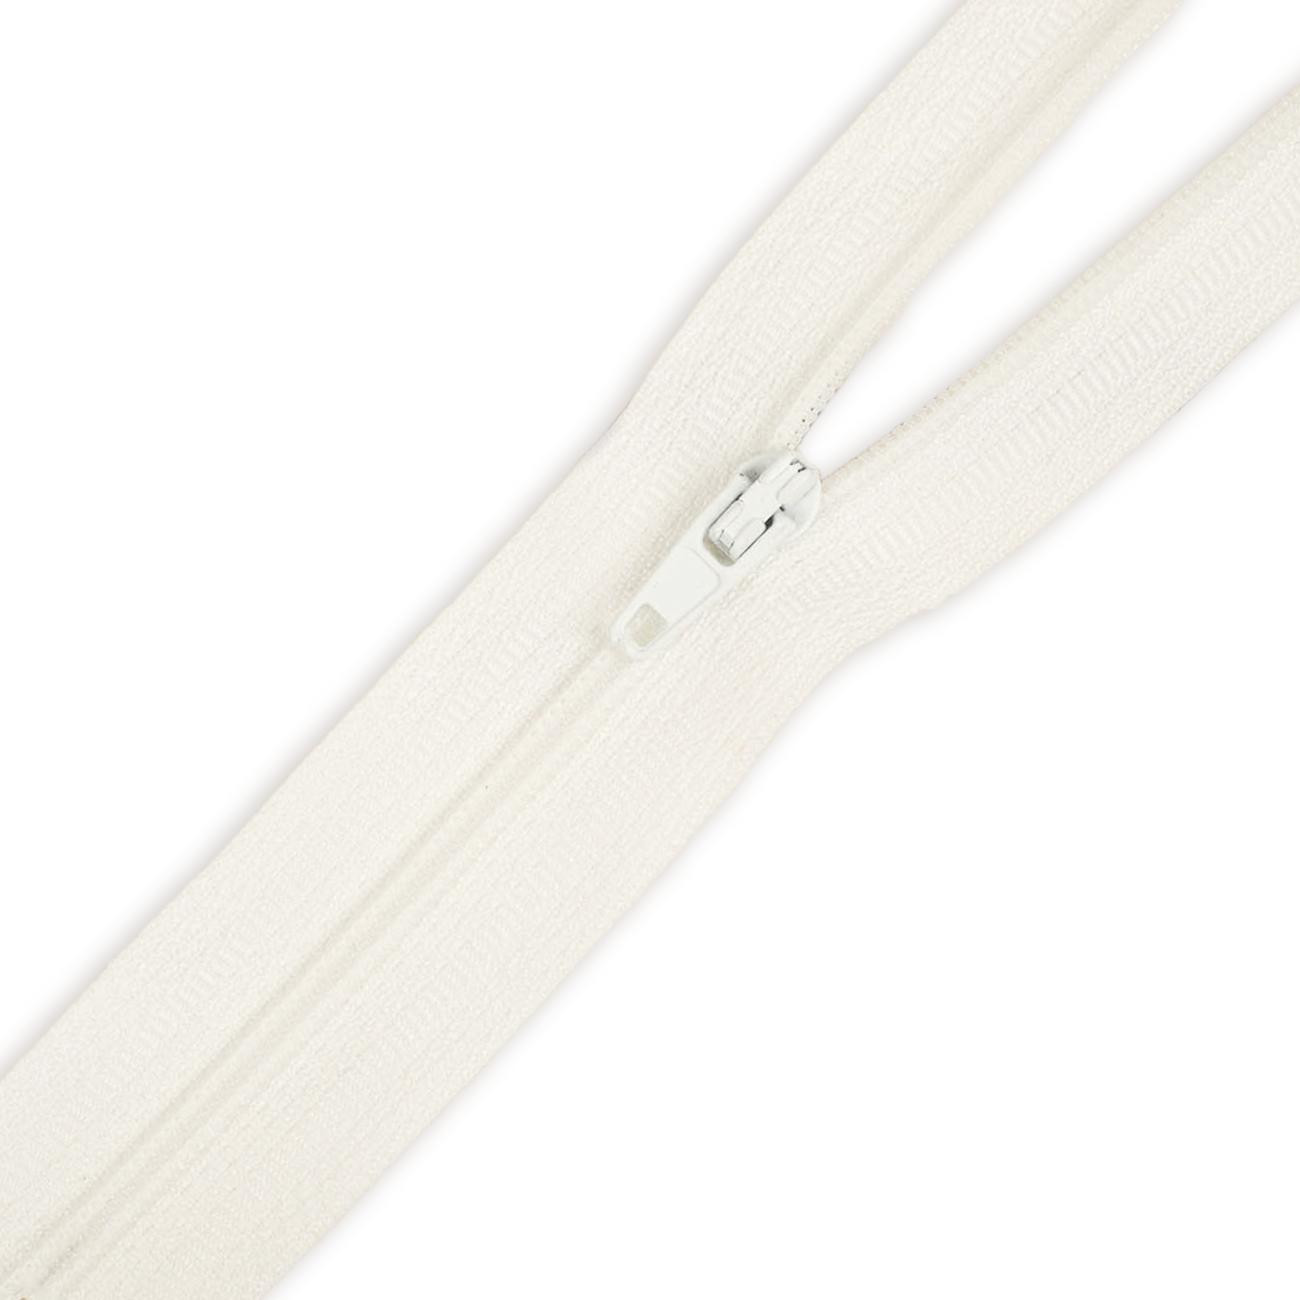 Coil zipper 14cm Closed-end - white